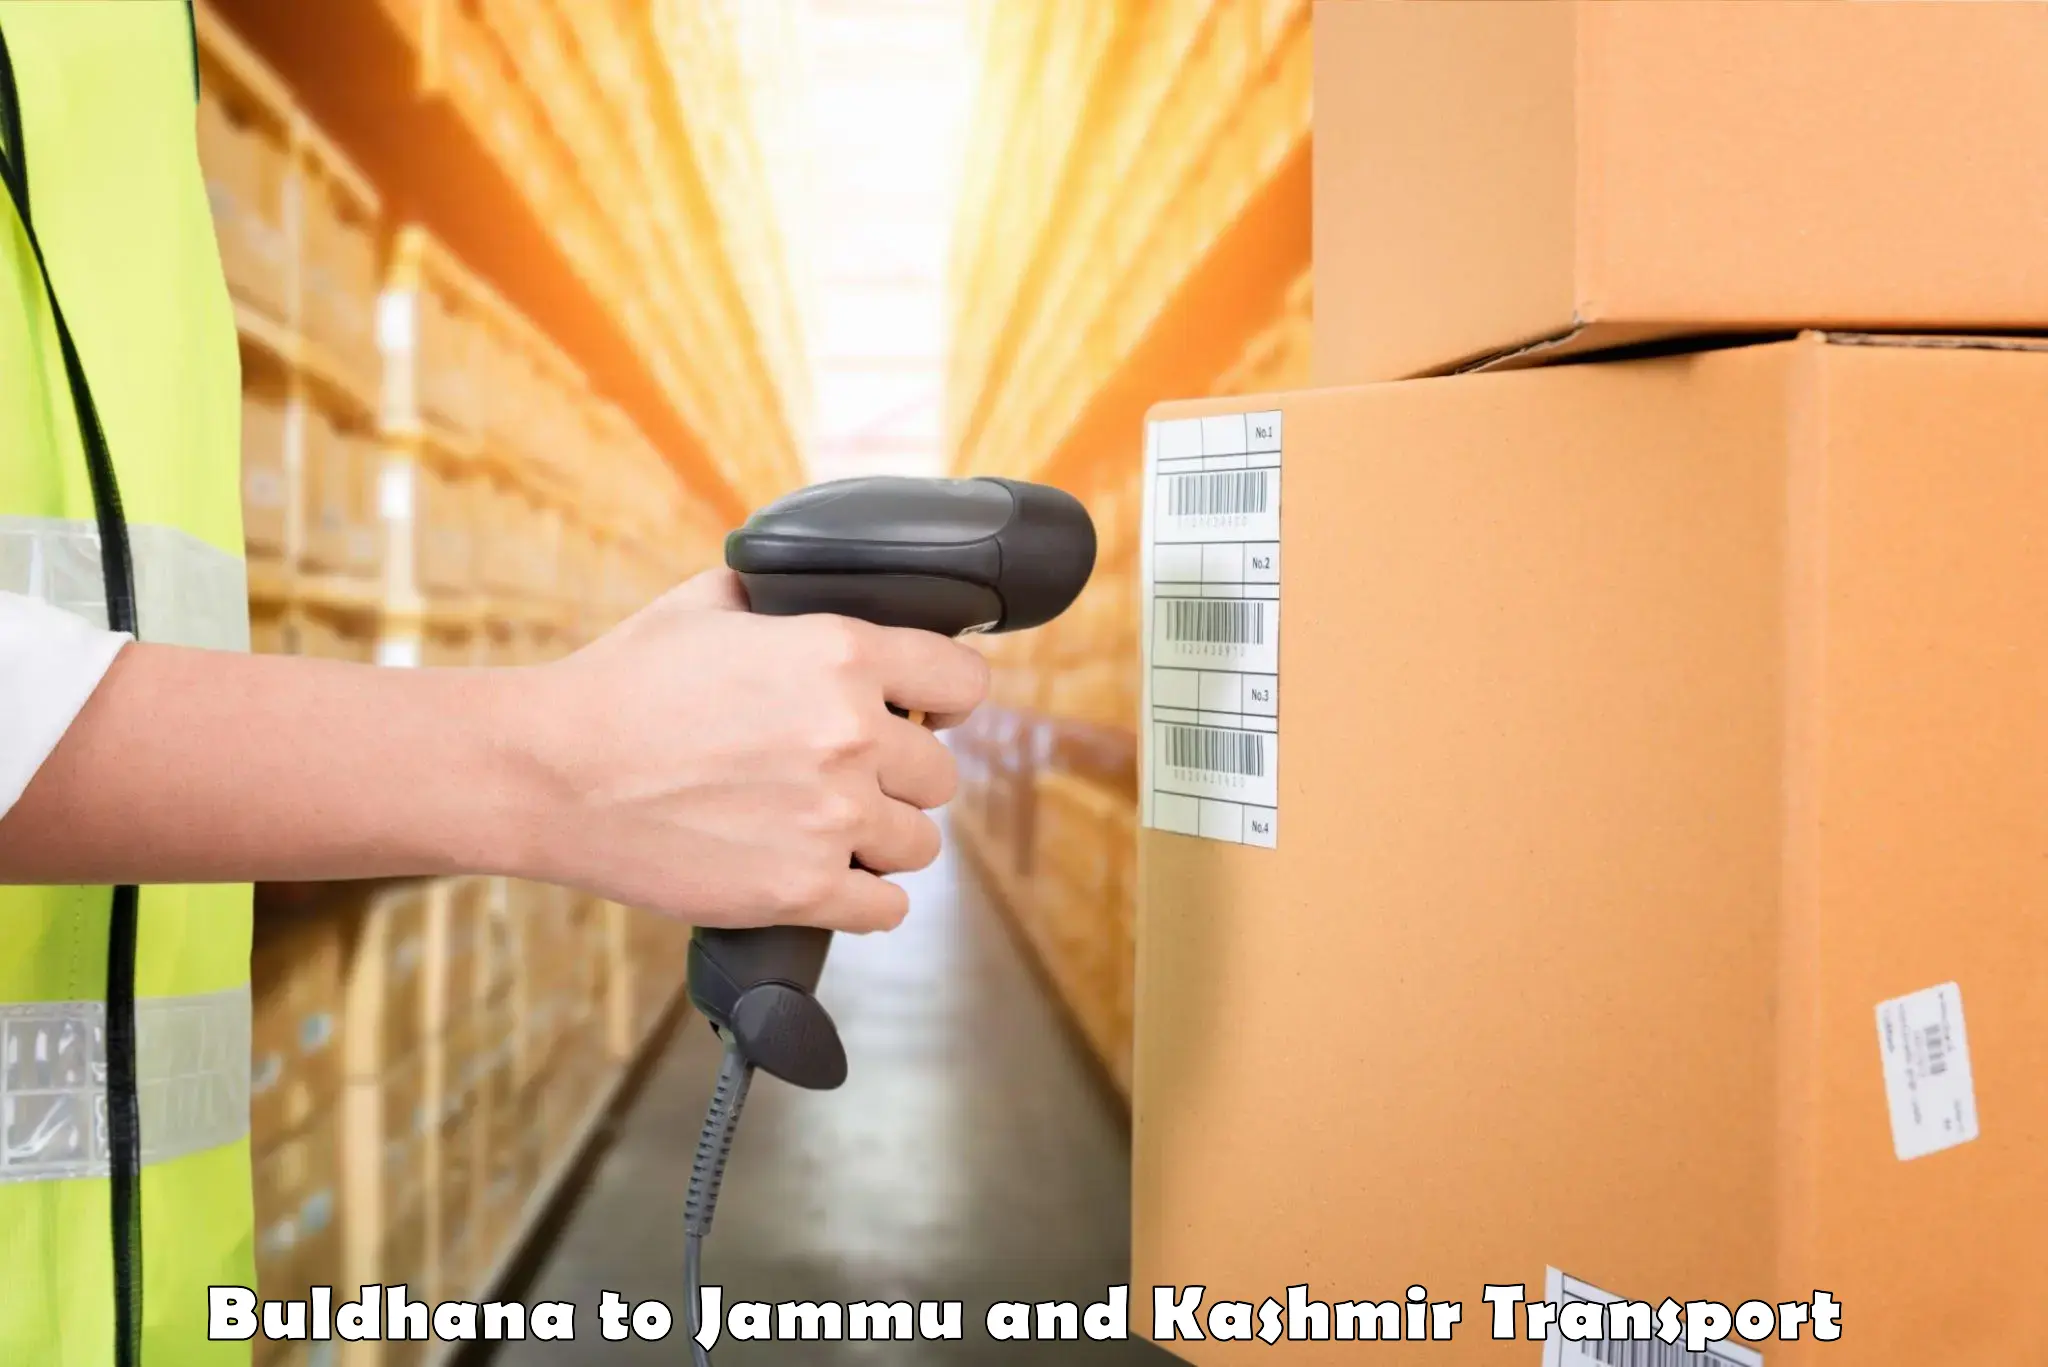 Truck transport companies in India Buldhana to Srinagar Kashmir